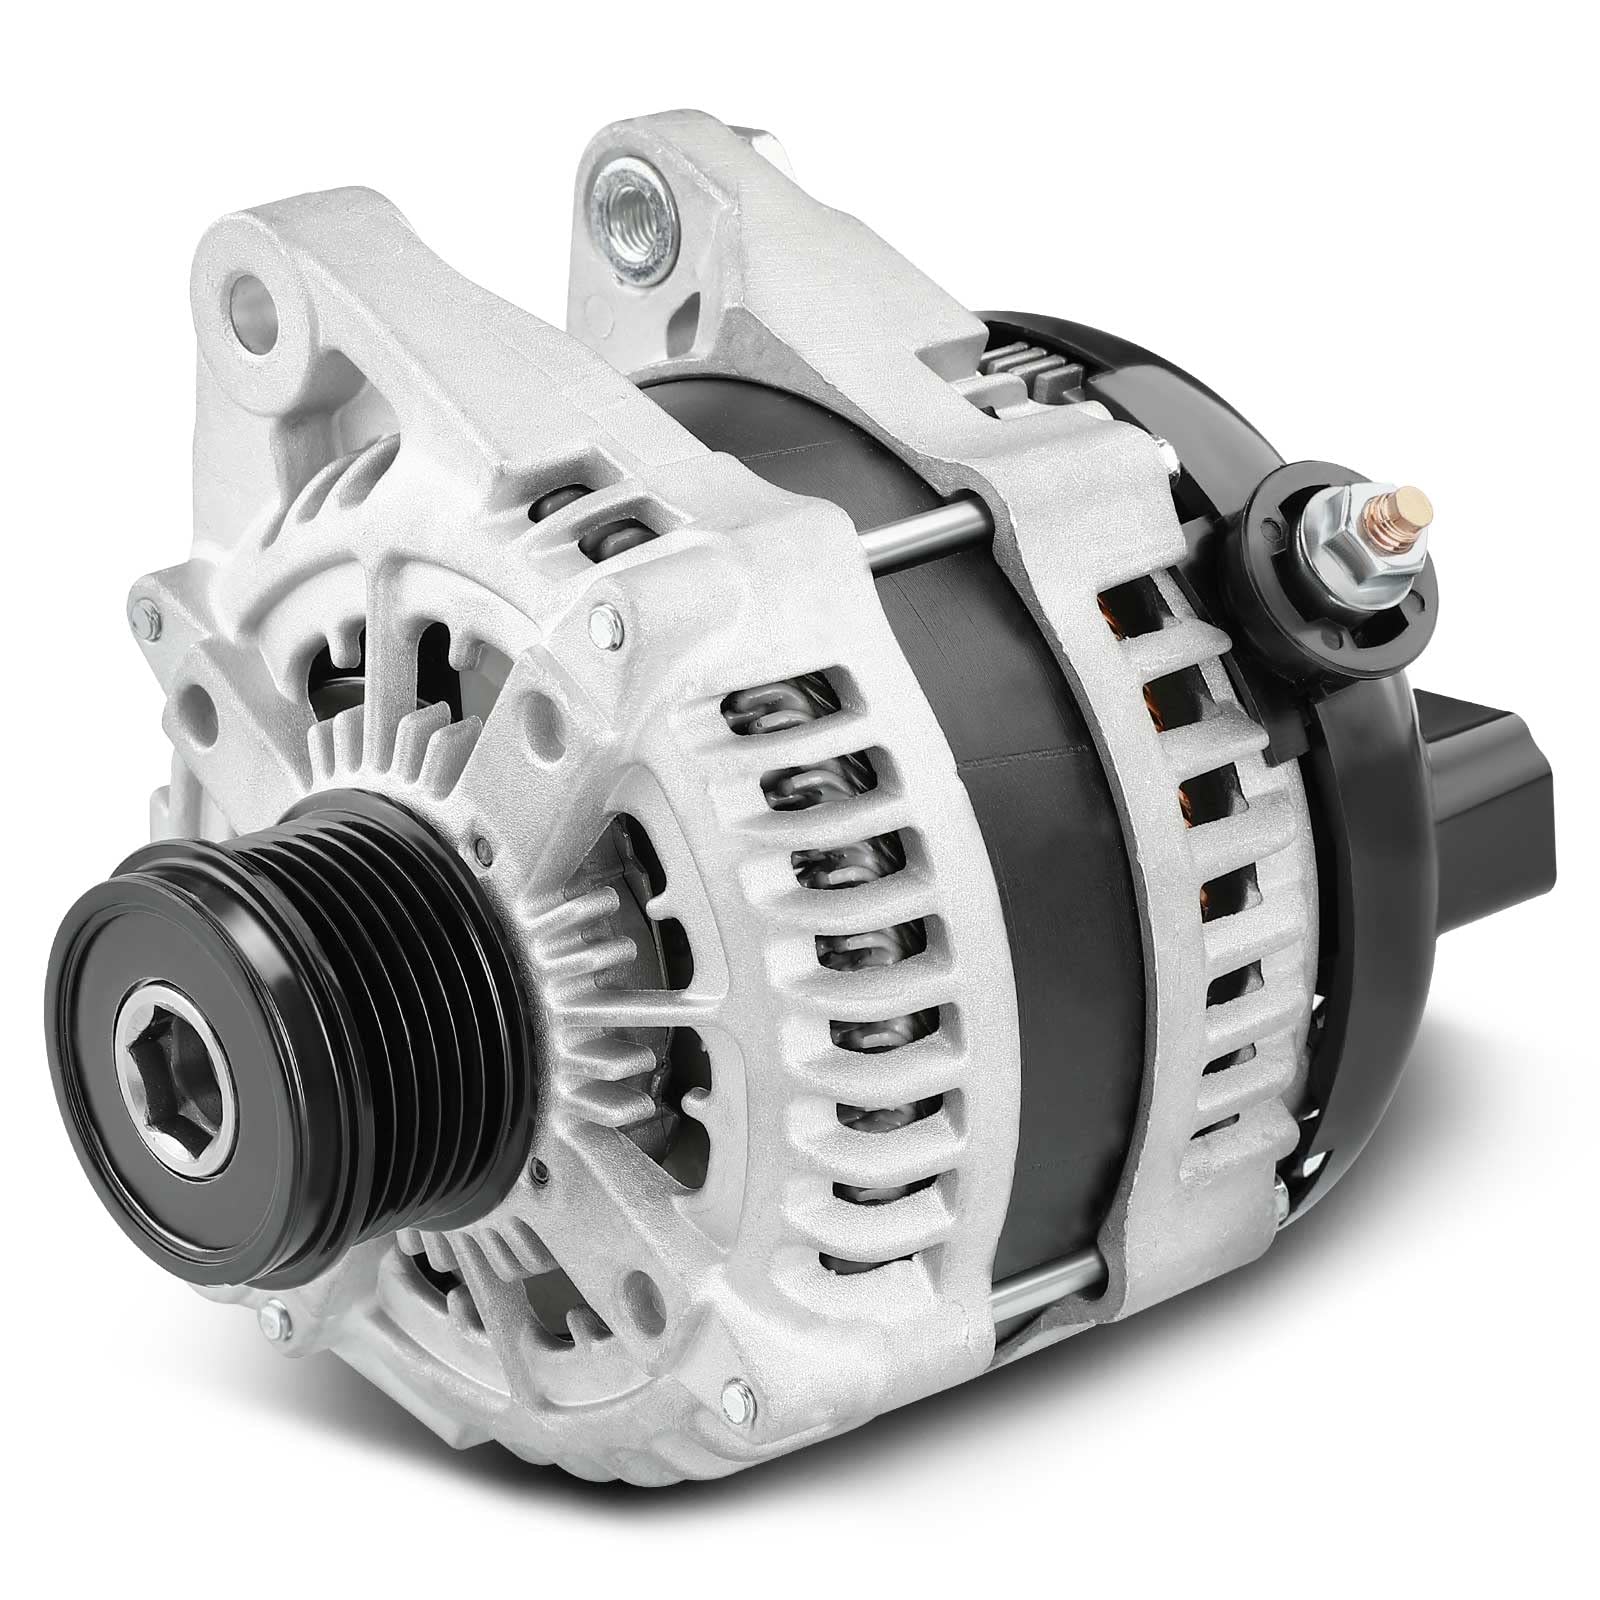 Frankberg Lichtmaschine Generator Diesel Kompatibel mit XF CC9 J05 X250 2011-2015 XF Sportbrake X250 2012-2014 R.a.n.g.e R.o.v.e.r Evoque L538 2011-2019 Replace# BJ3210300AC von Frankberg